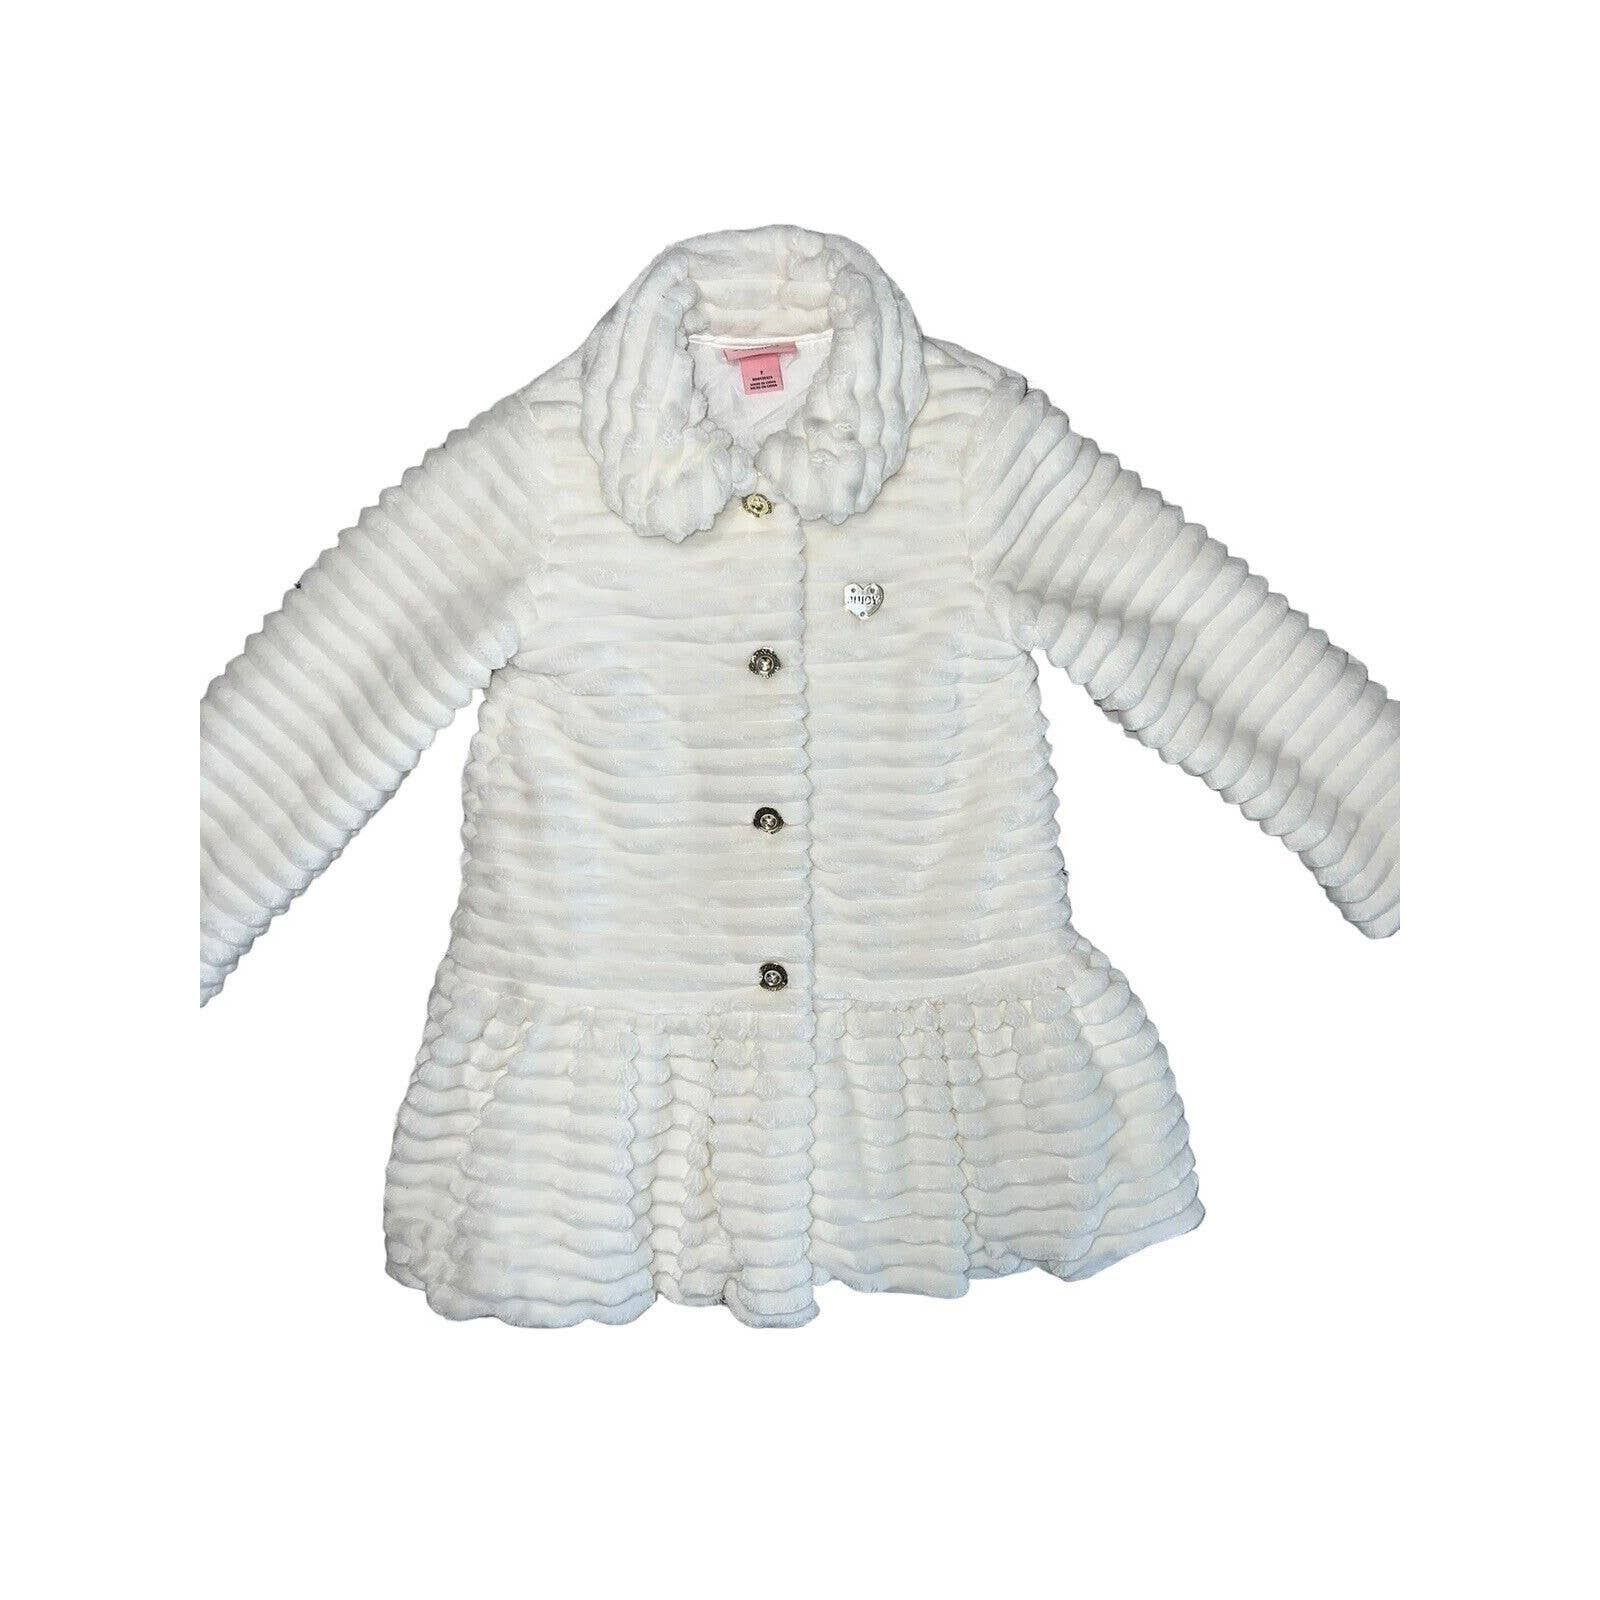 Juicy Couture Juicy Couture White Faux Fur Kids Winter Jacket Coat ...